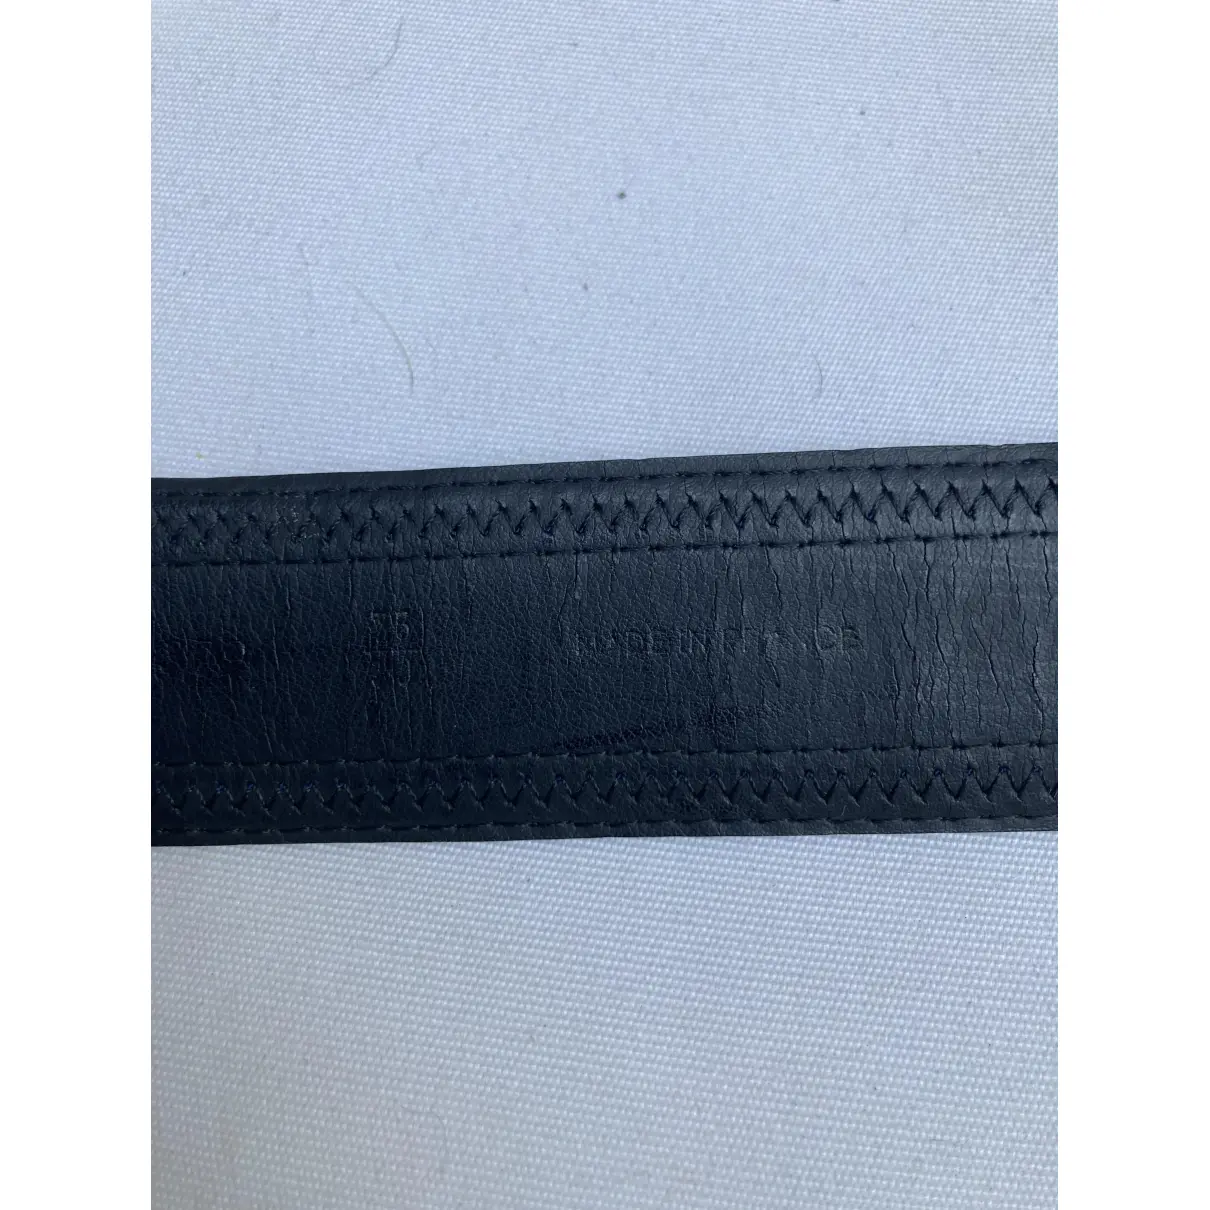 Leather belt Yves Saint Laurent - Vintage